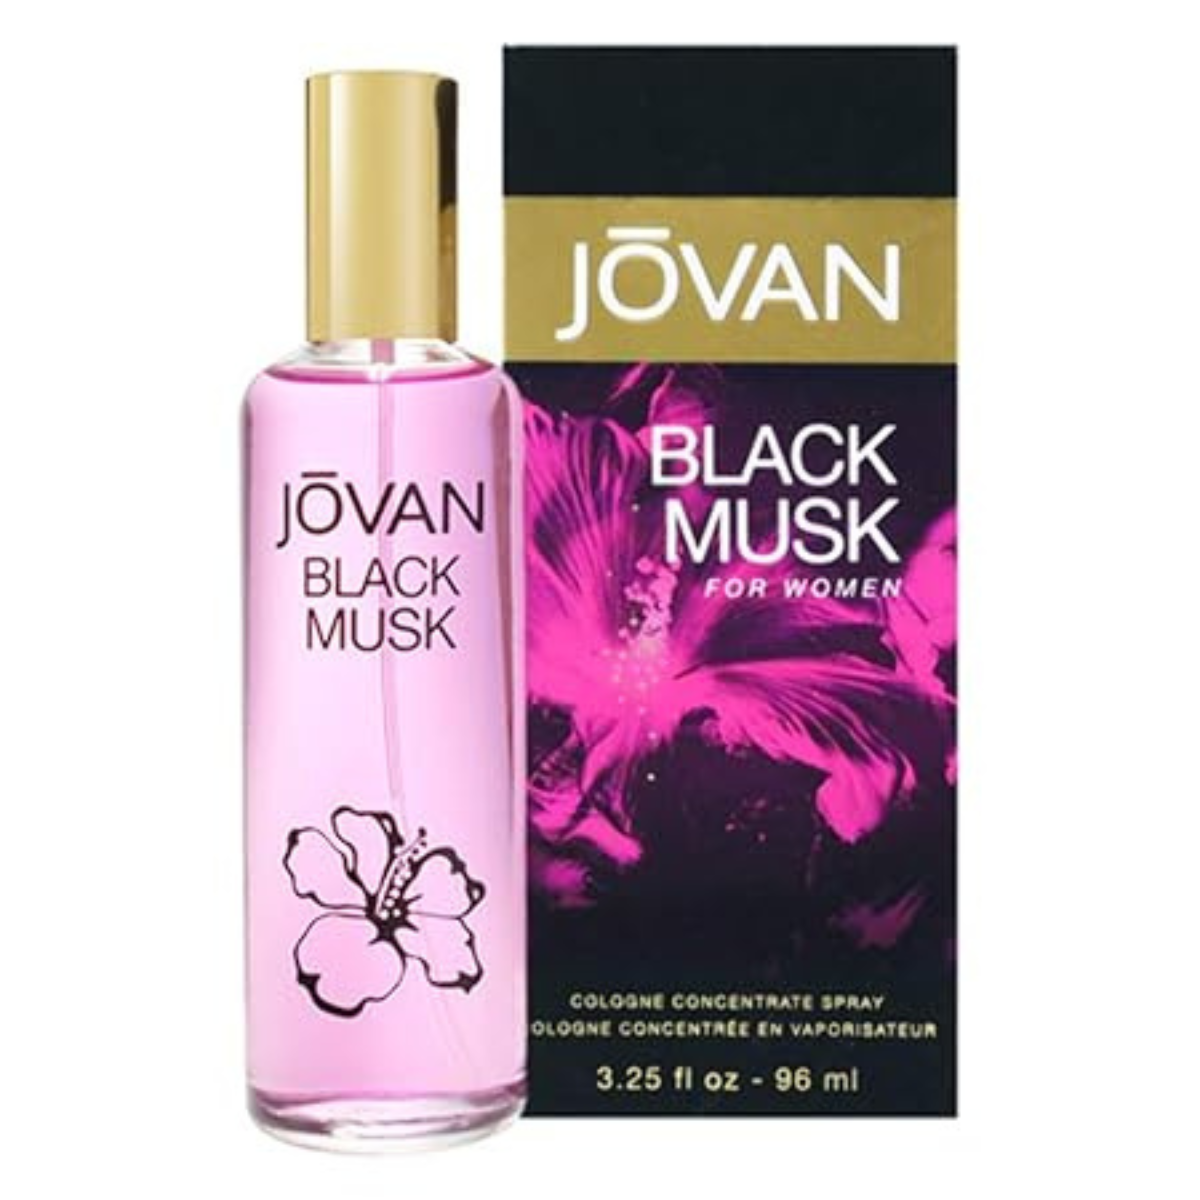 Jovan Black Musk 96 Ml For Women Perfume